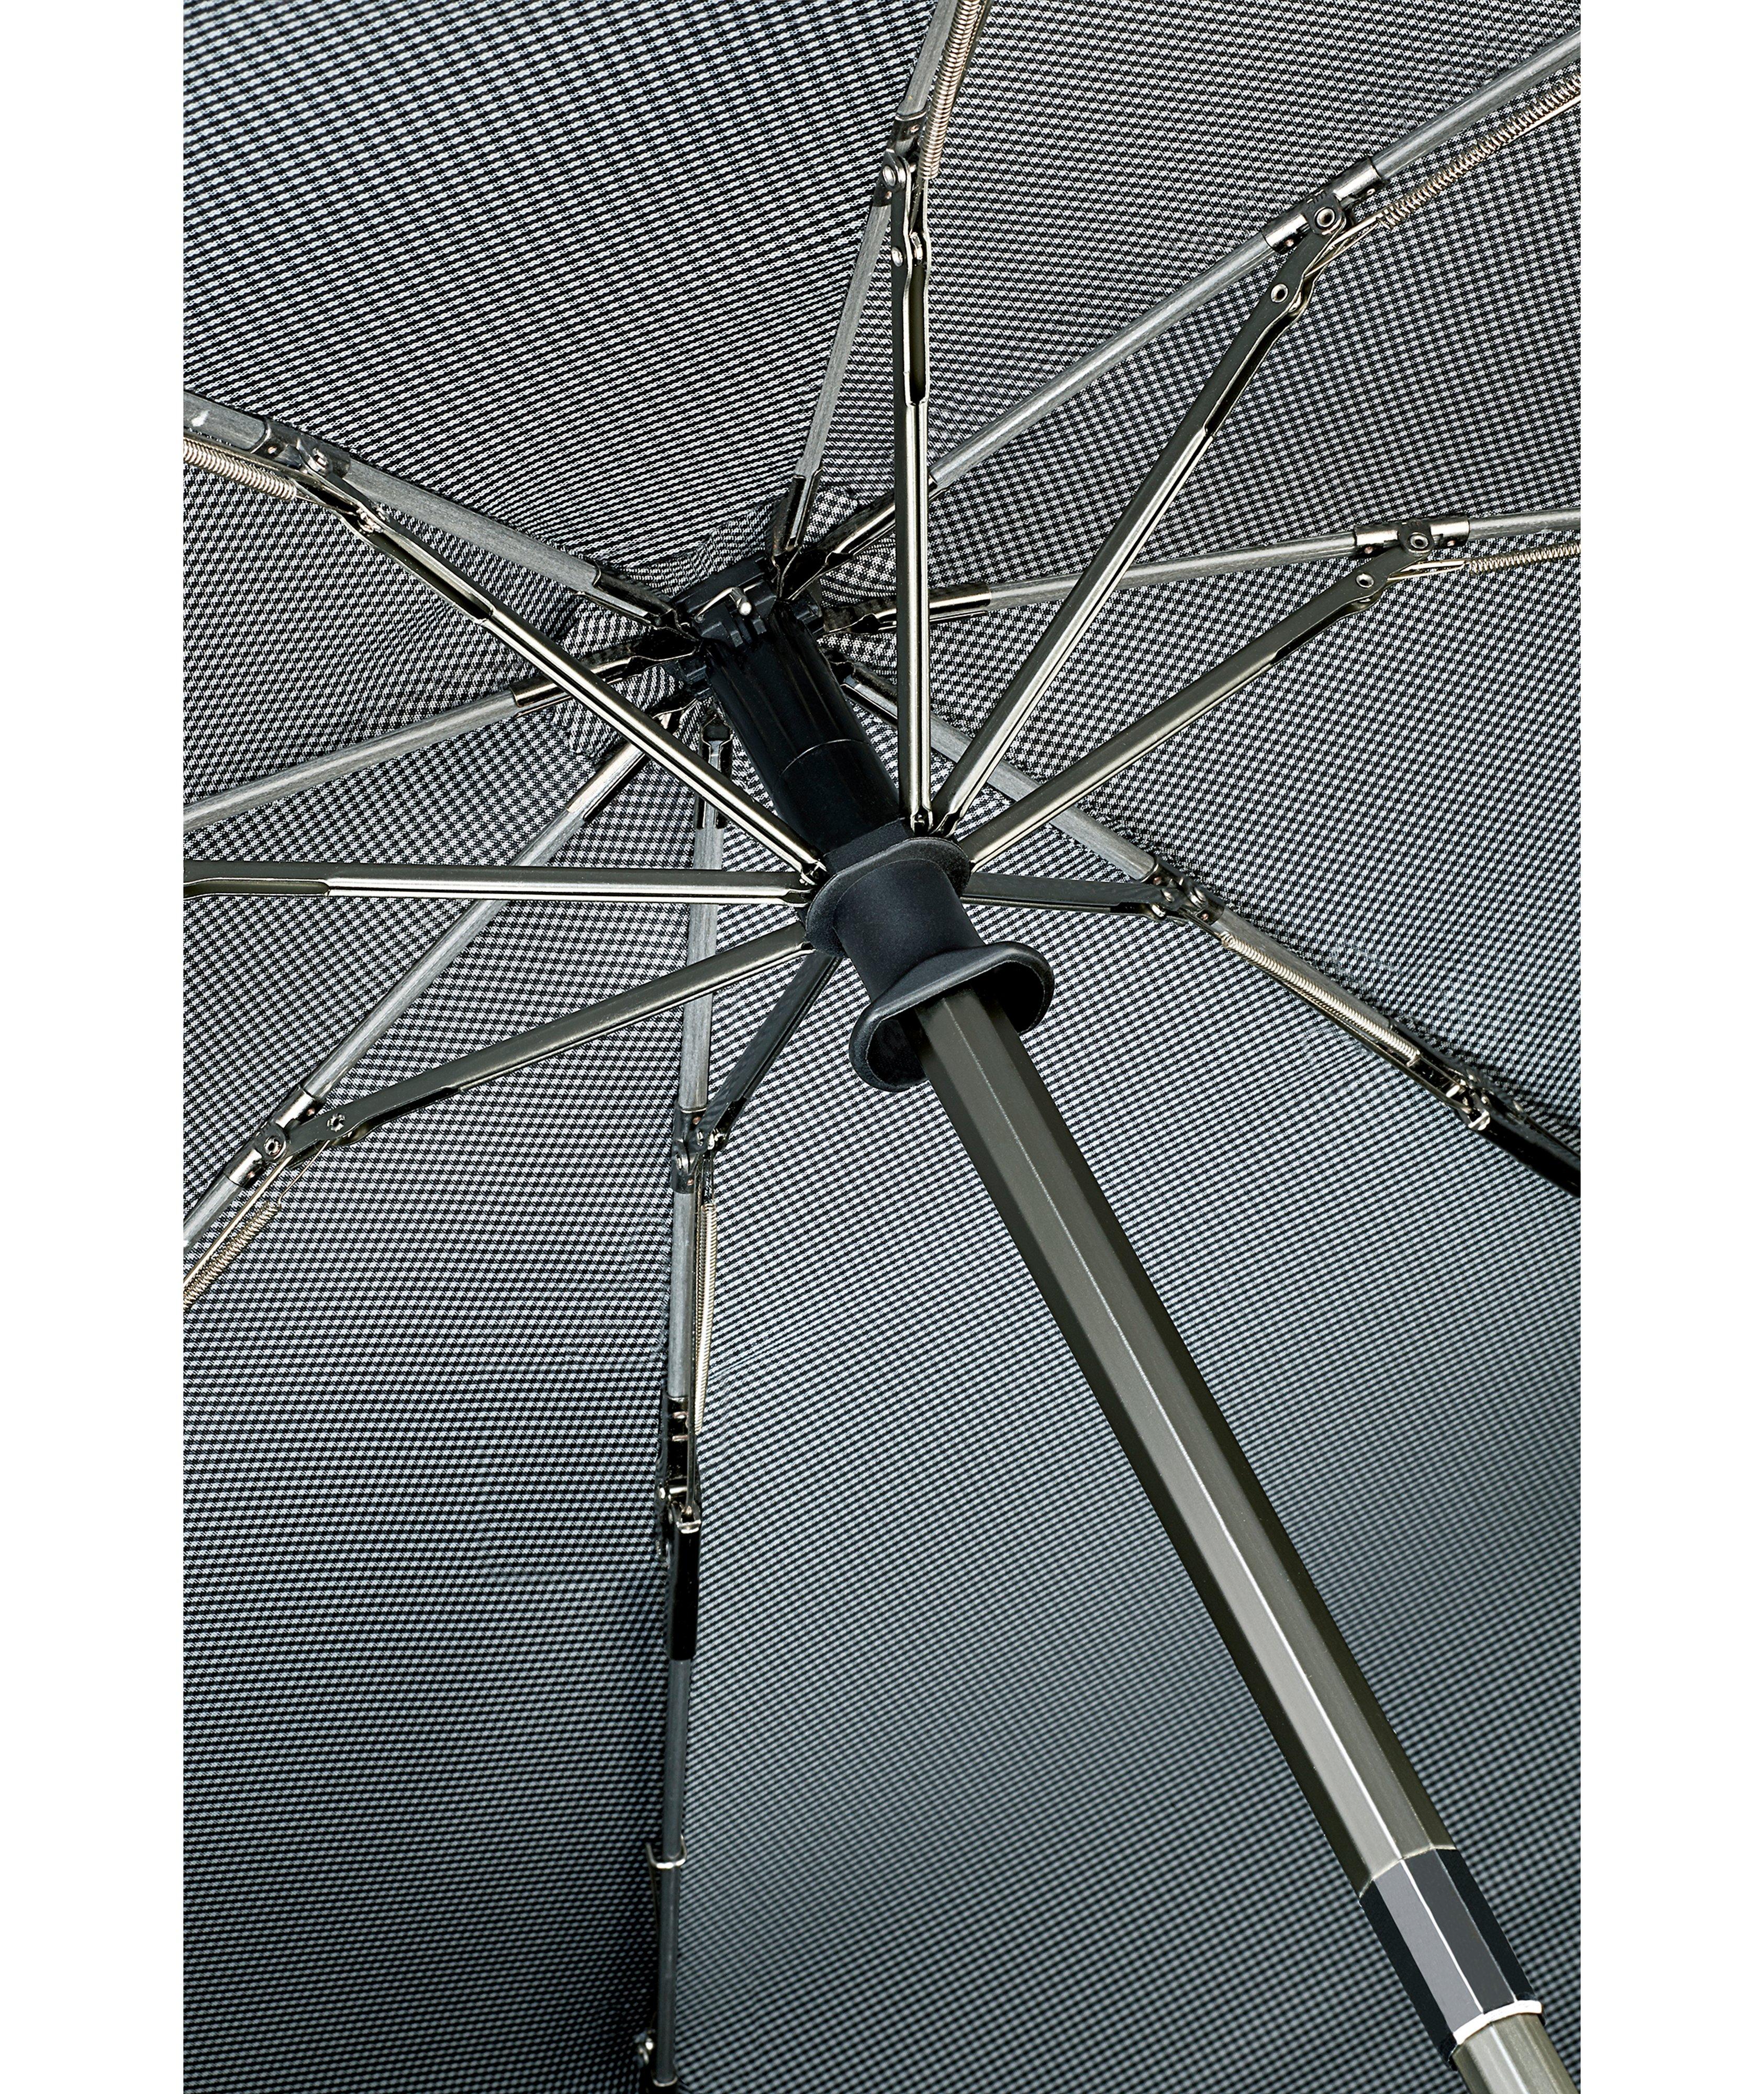 Parapluie, collection Diamond image 1